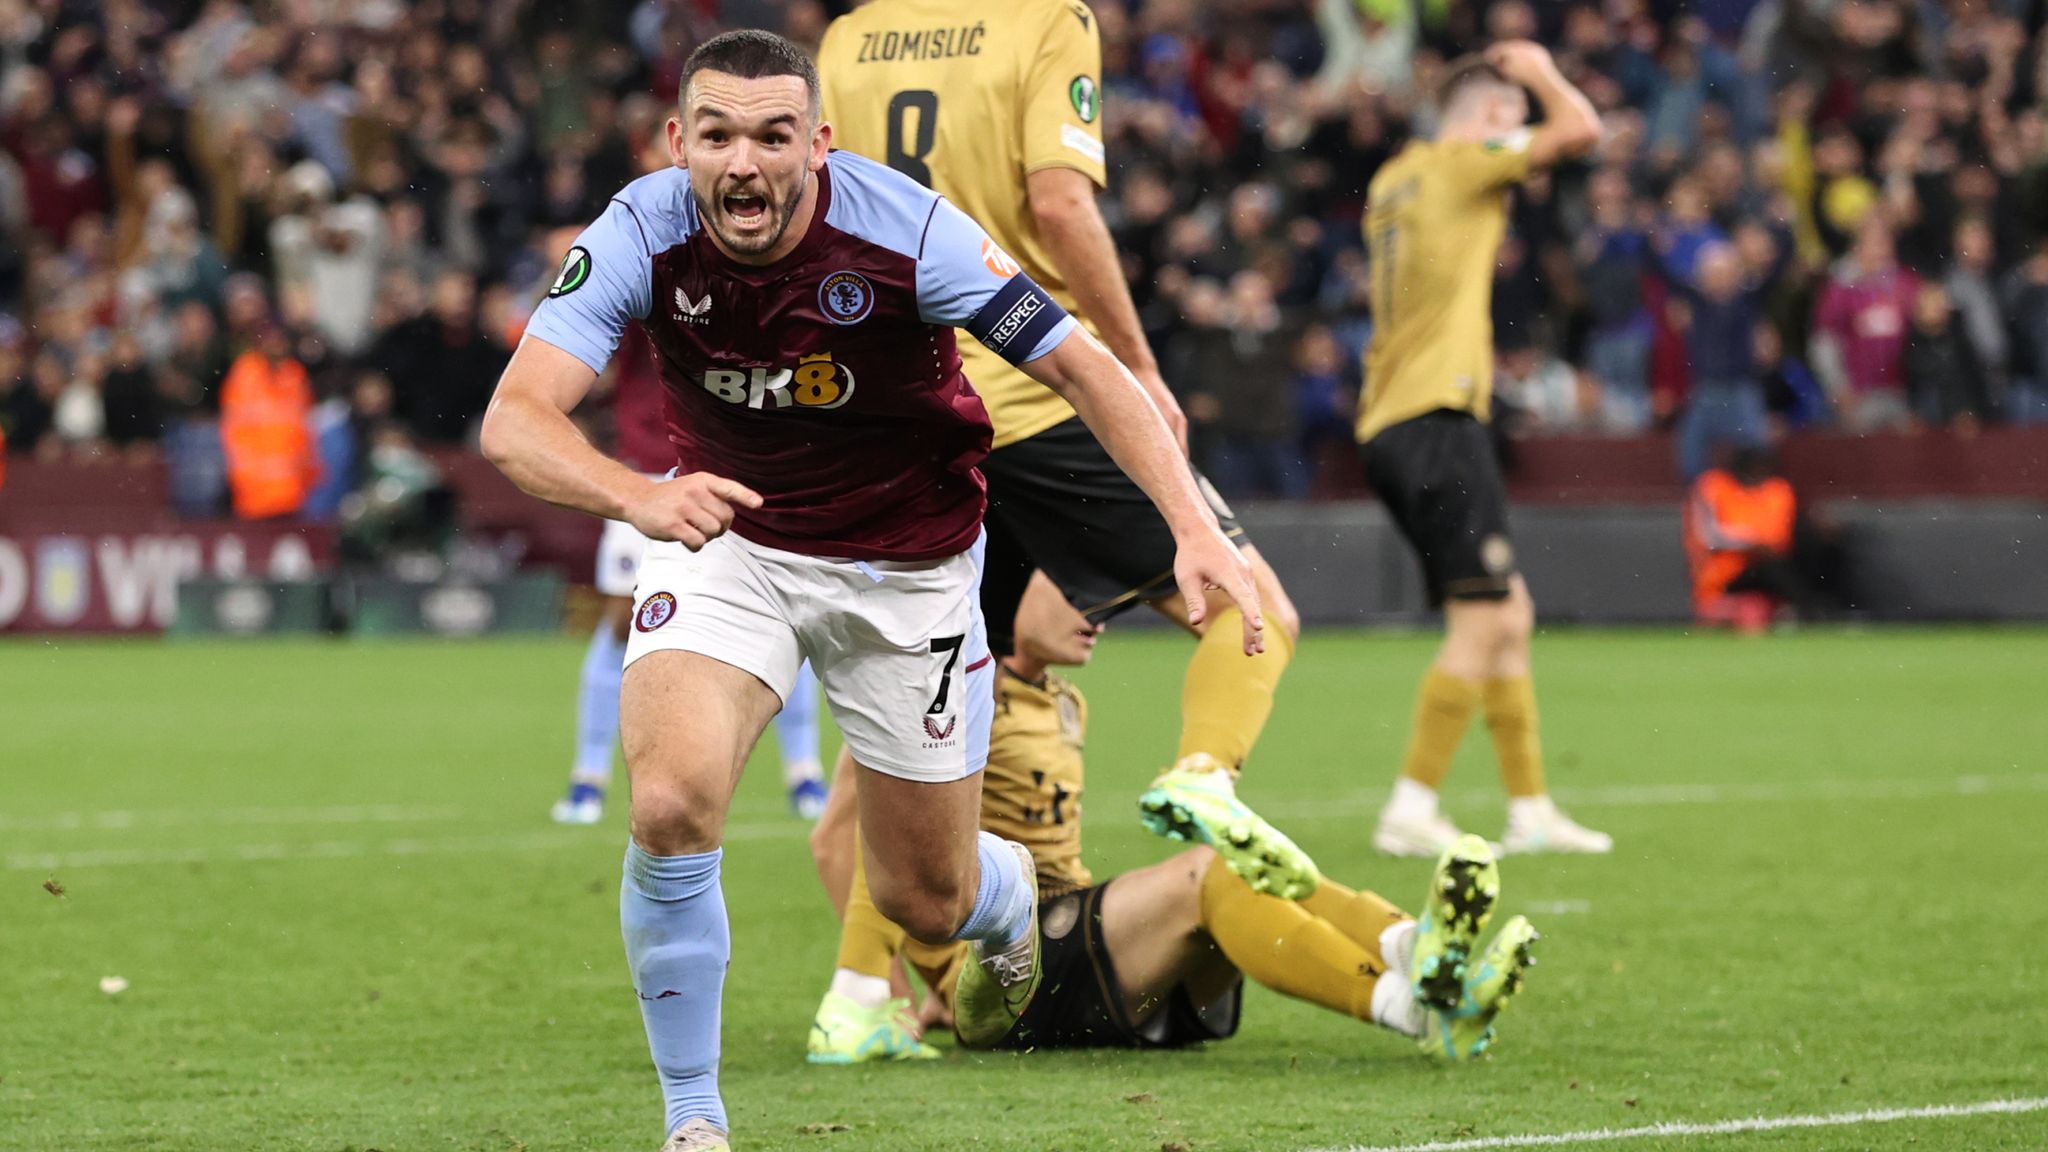 EA SPORTS launches FIFA 14 on mobile - free to play, News, Aston Villa  Football Club